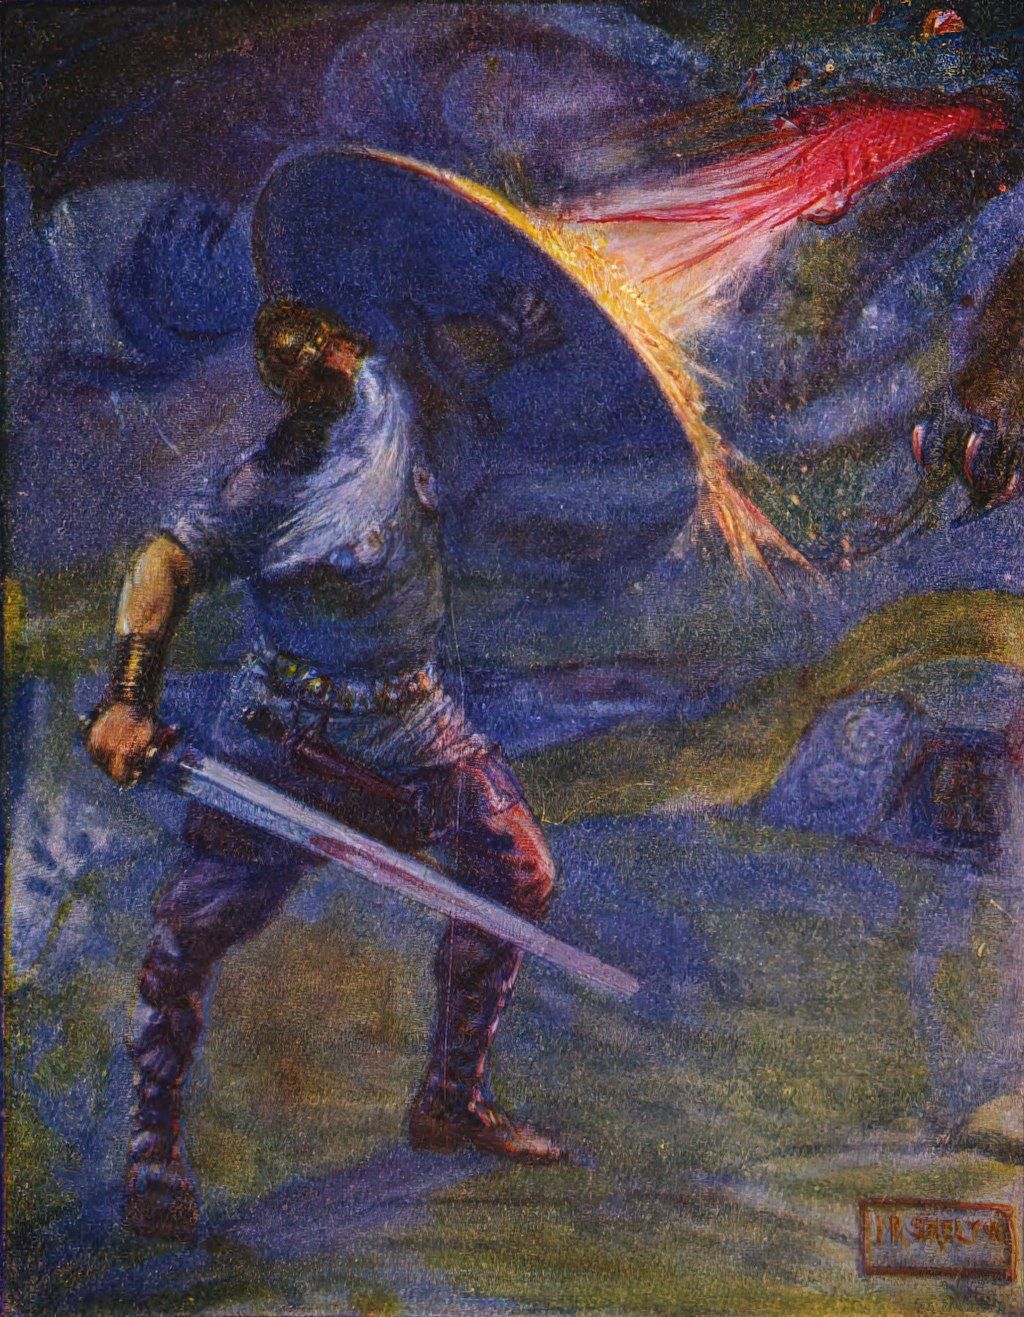 La historia de Beowulf, el héroe anglosajón